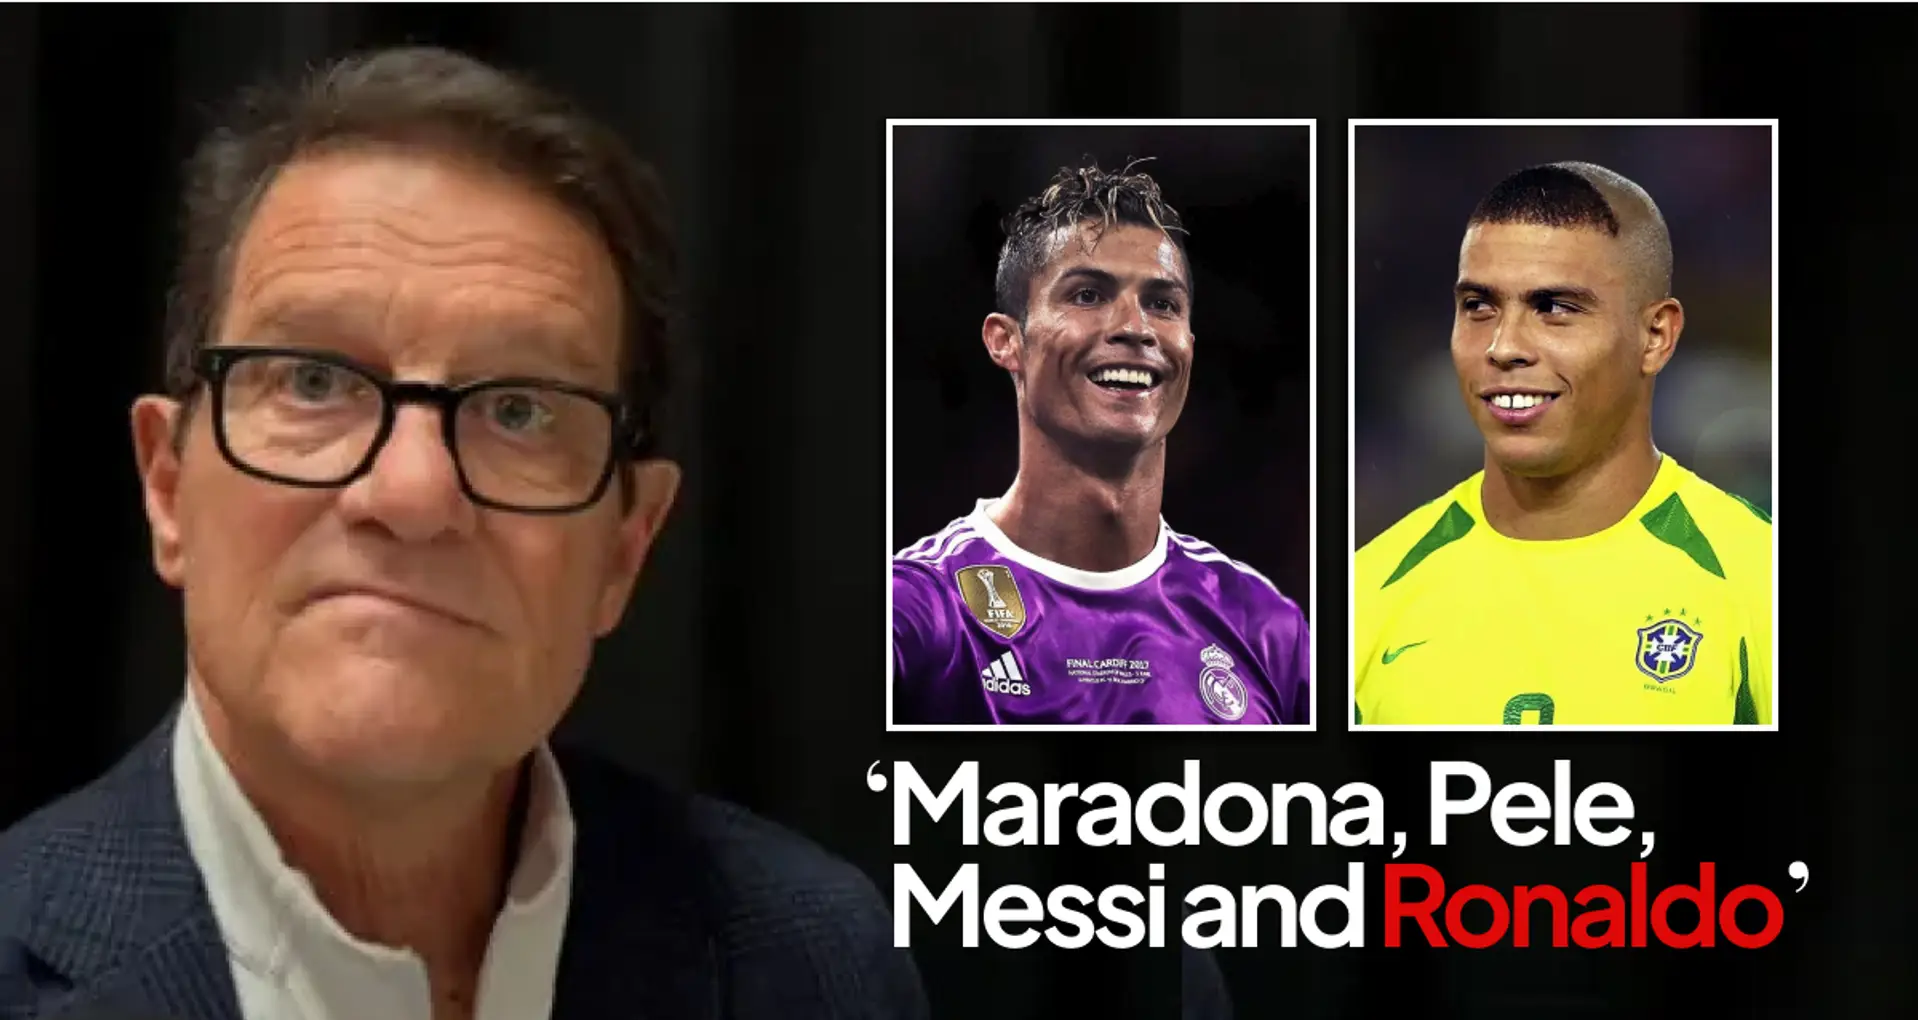 'He's up there with Messi, Pele, Maradona': Fabio Capello picks the best Ronaldo between Cristiano and Fenômeno